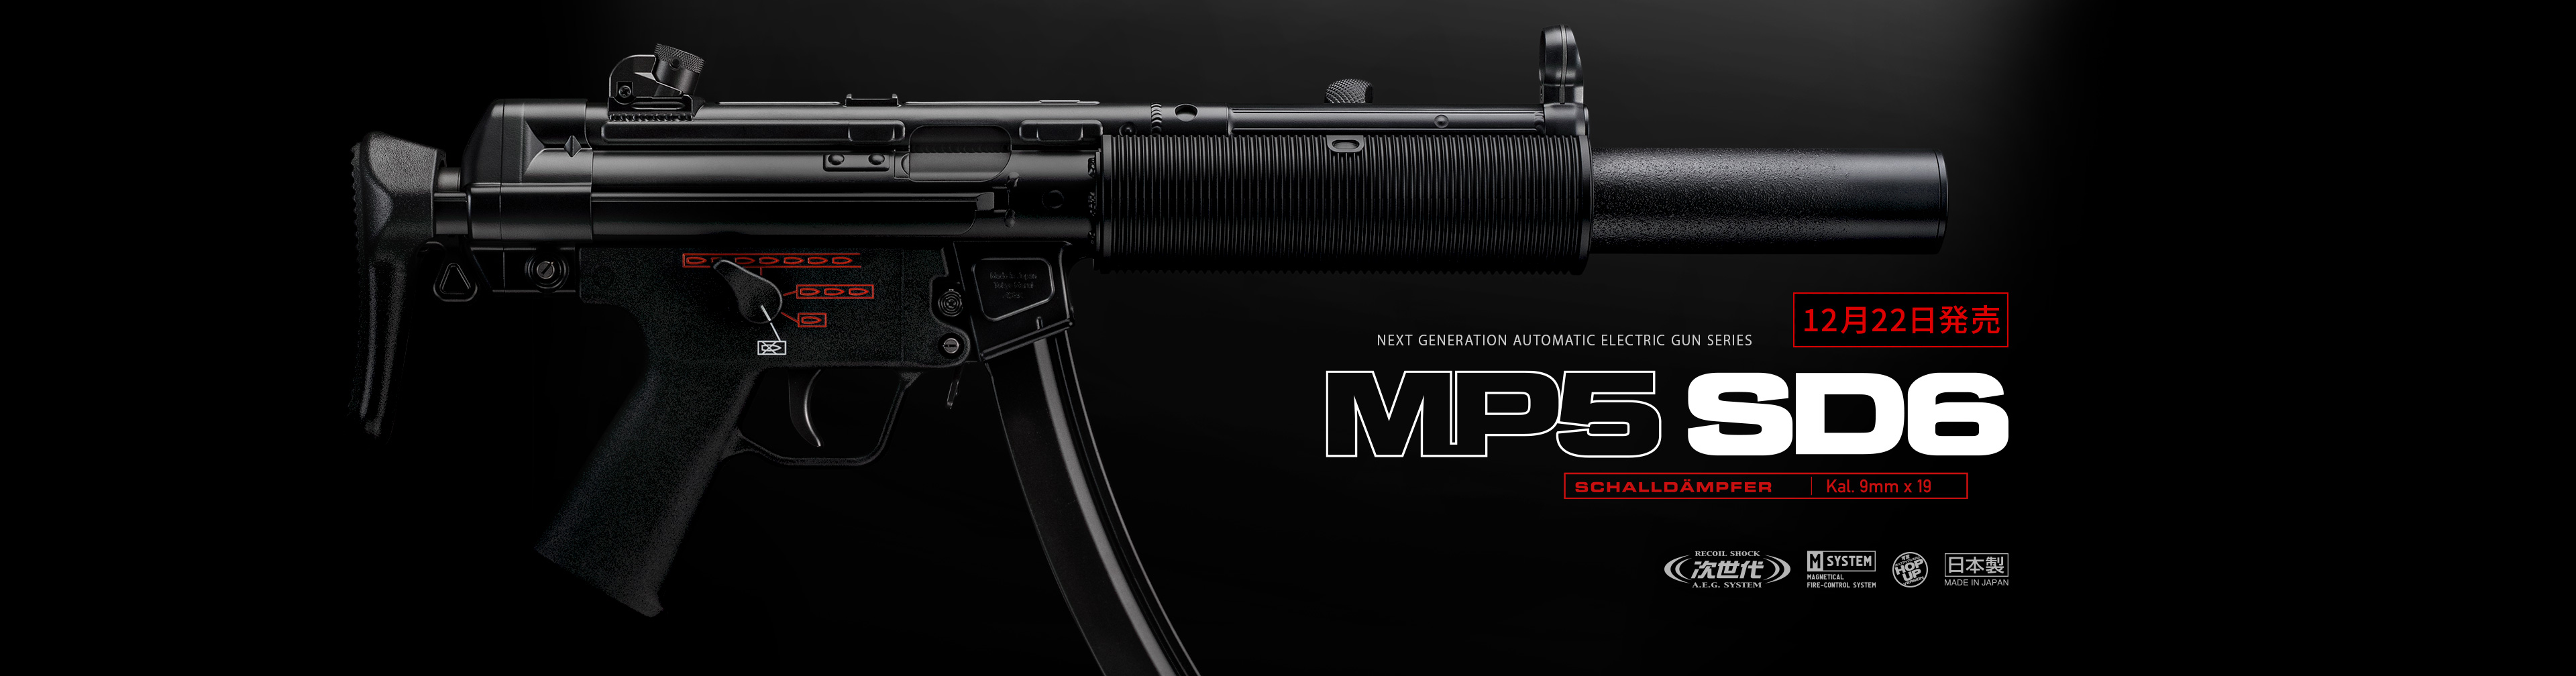 MP5 SD6 - 次世代電動ガン | 東京マルイ エアソフトガン情報サイト